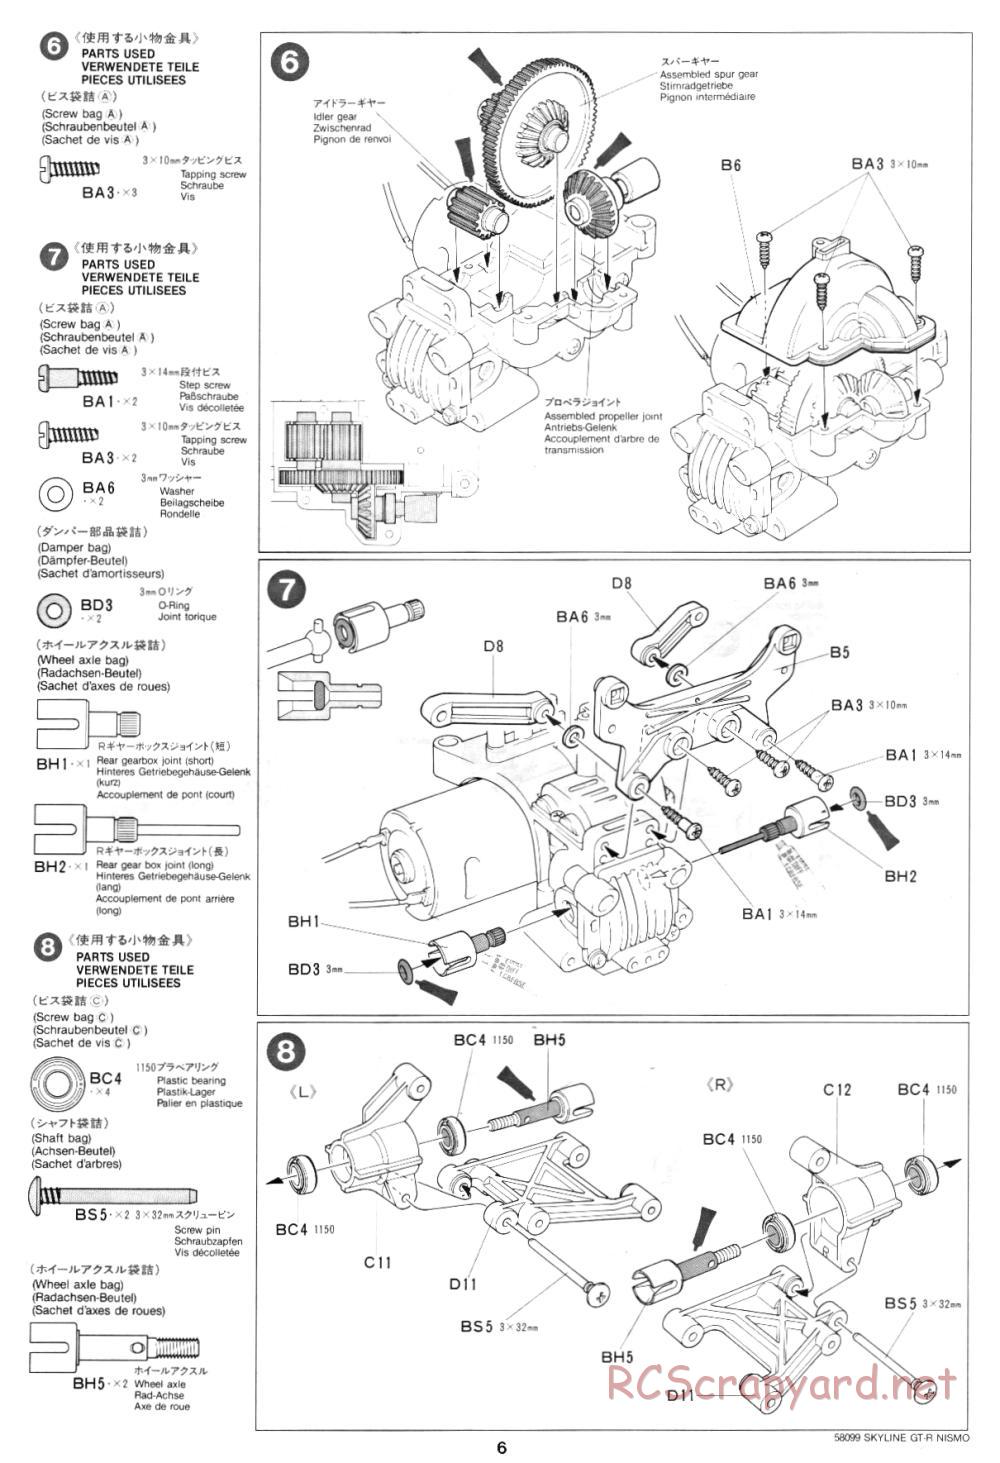 Tamiya - Nissan Skyline GT-R Nismo - 58099 - Manual - Page 6